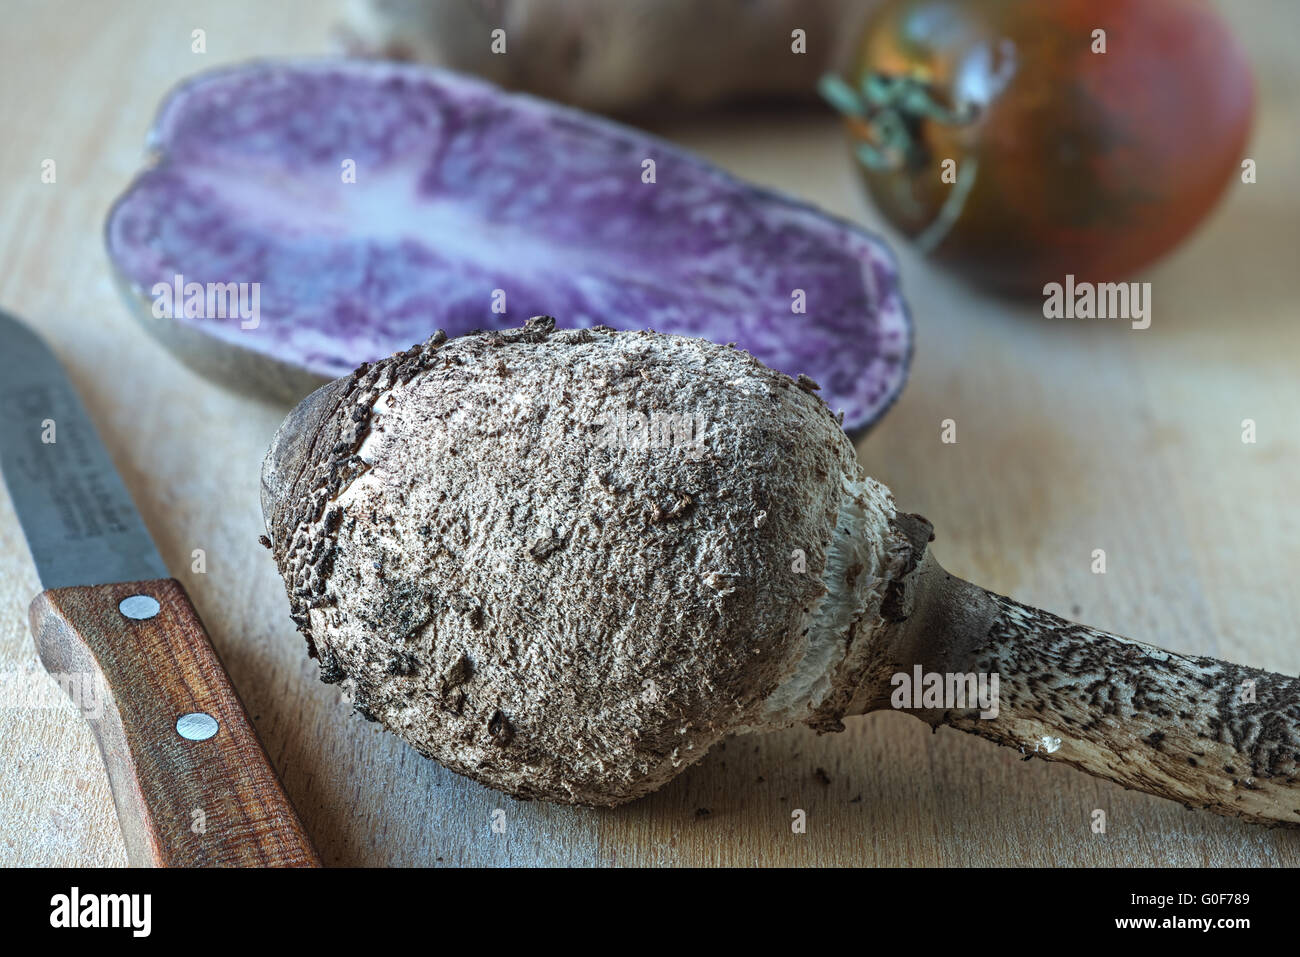 Young Parasol Mushroom and Blue Potato Stock Photo